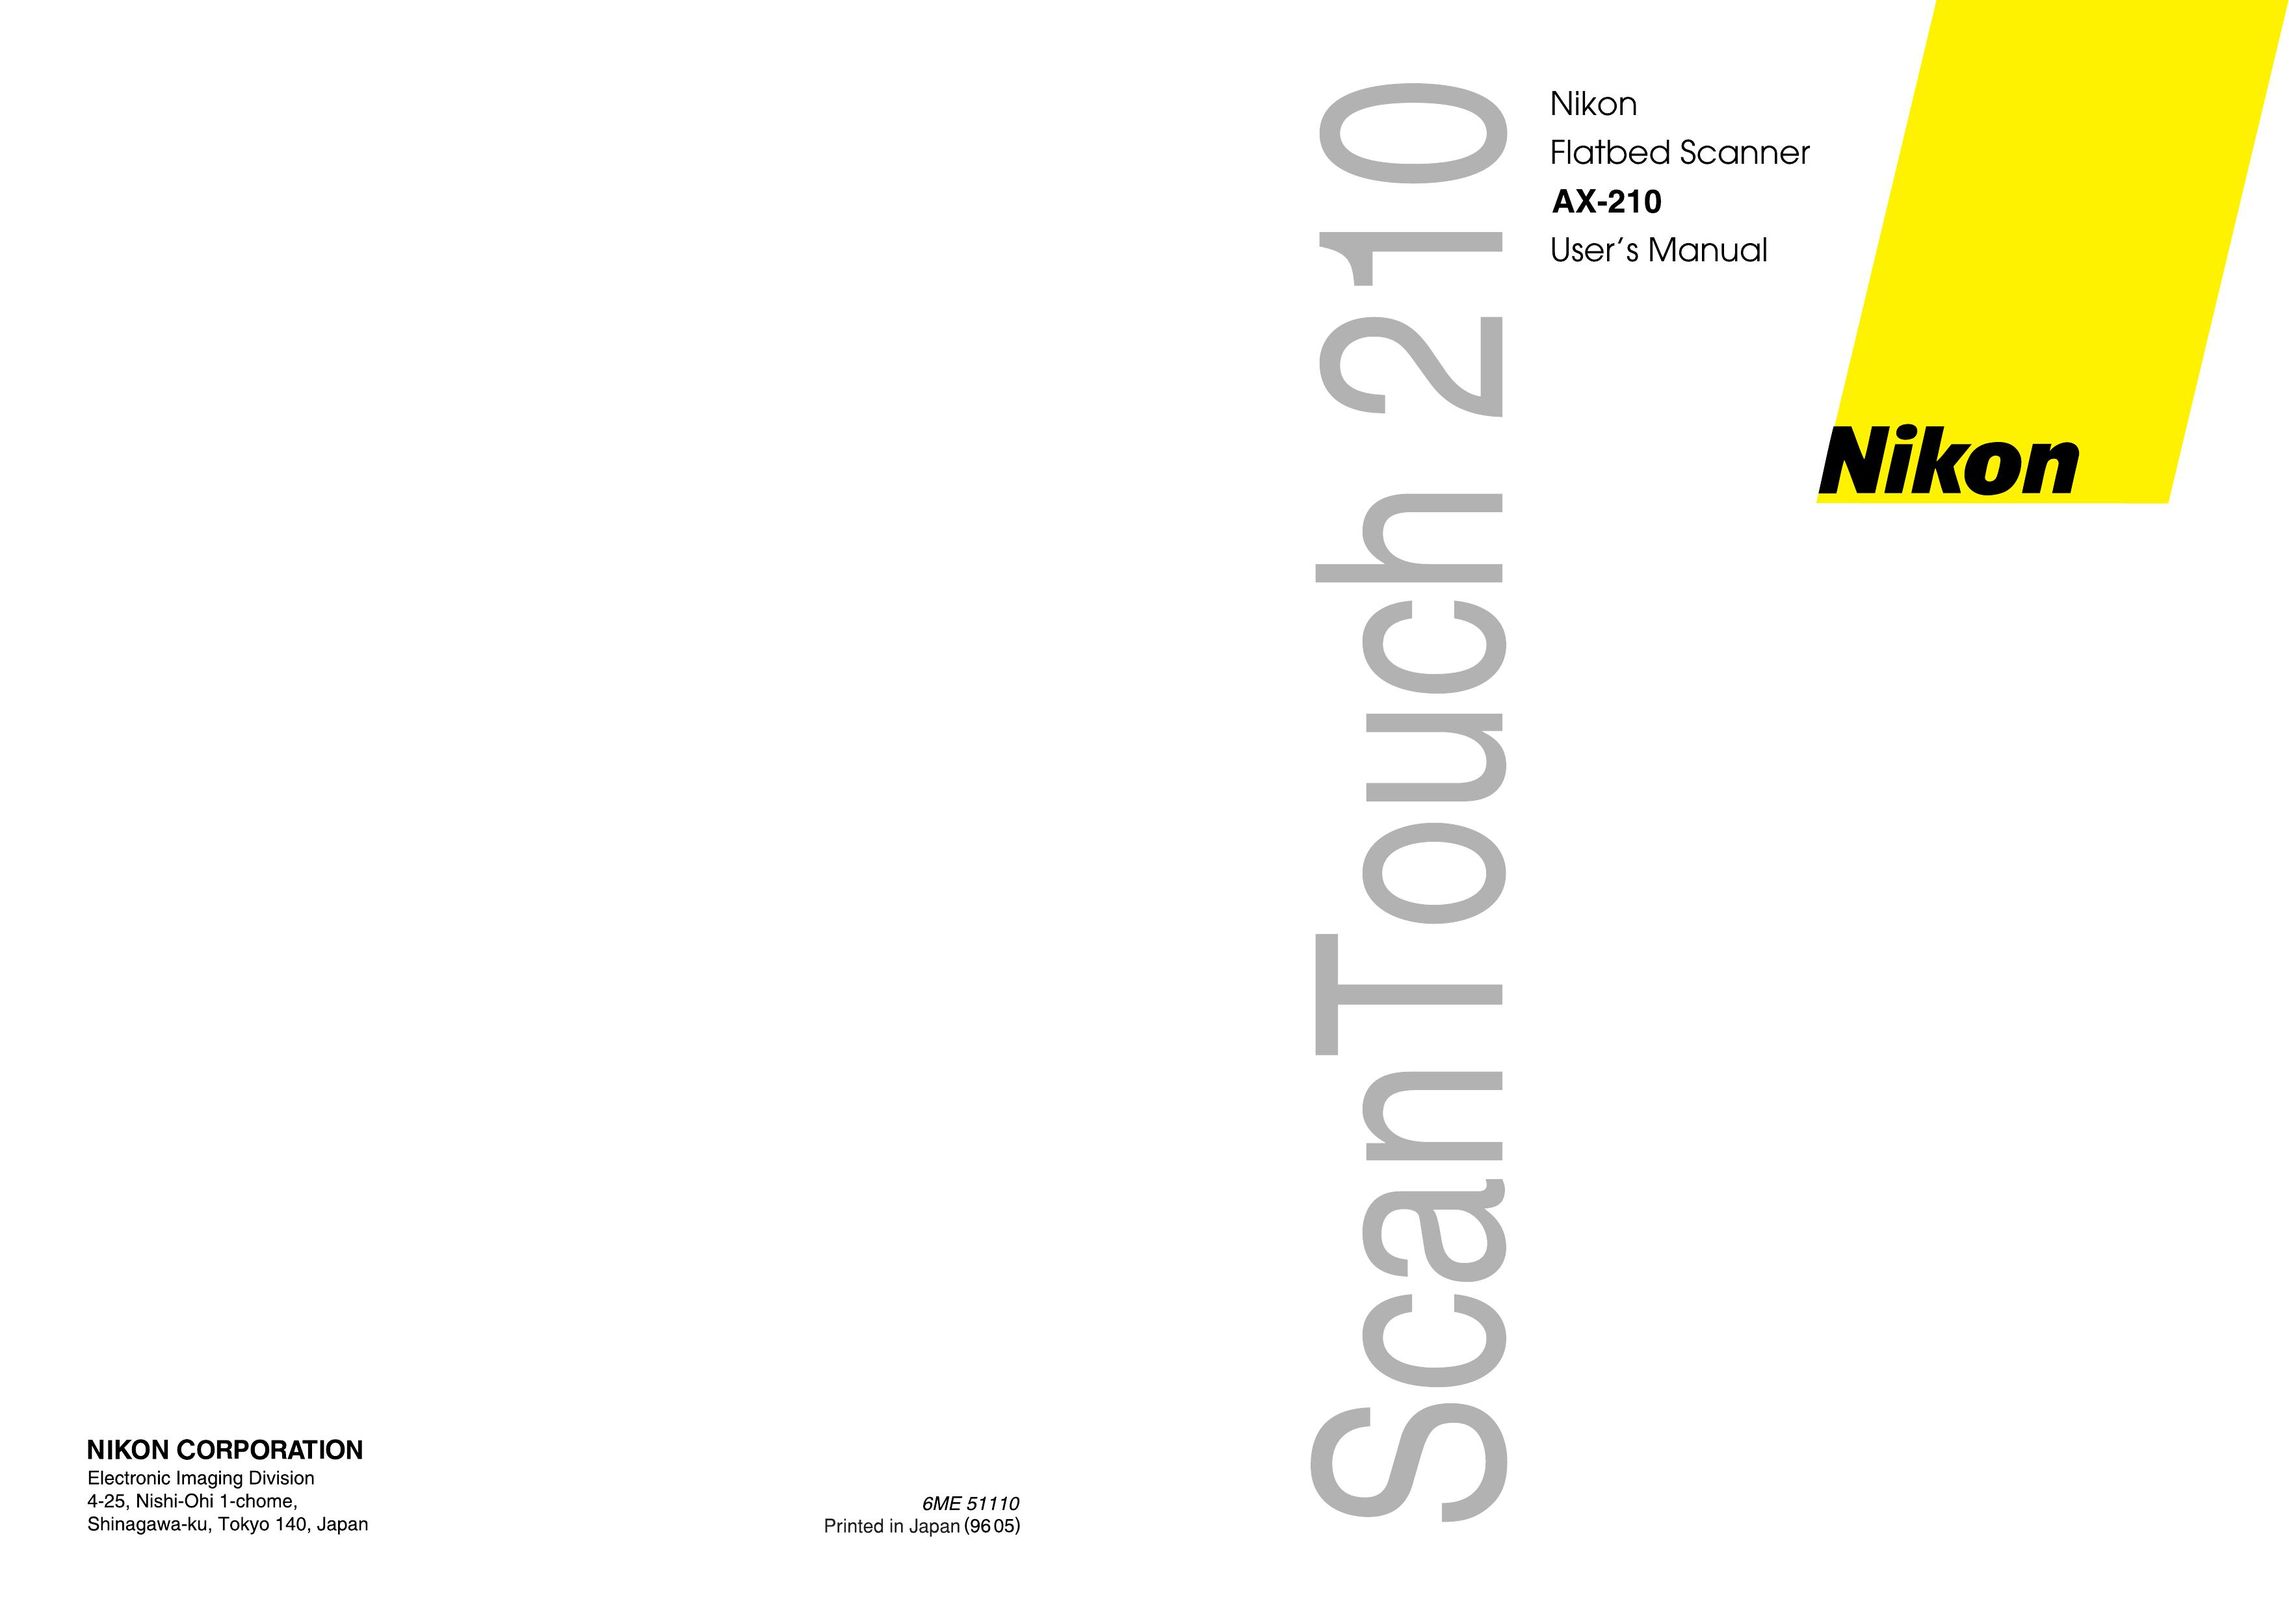 Nikon AX-210 Scanner User Manual